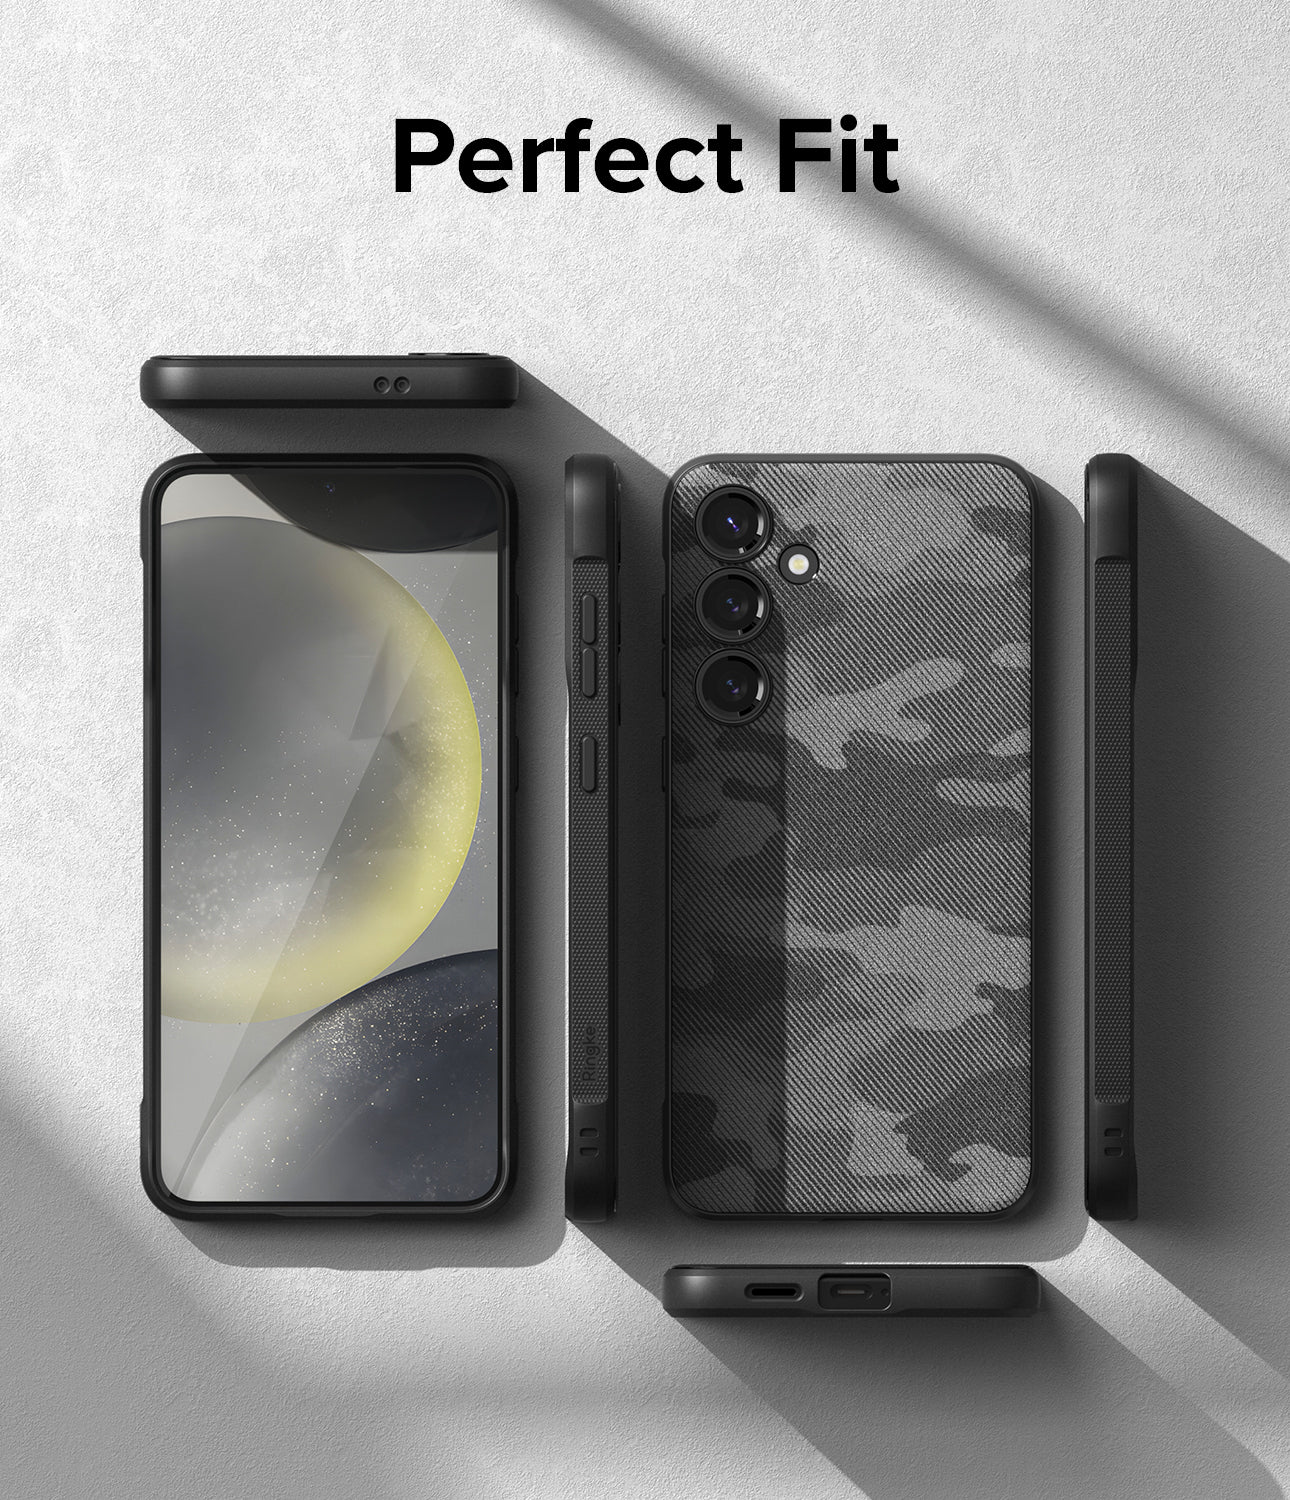 Galaxy S24 PLUS S24+ Case Original NILLKIN Frosted Shield Pro